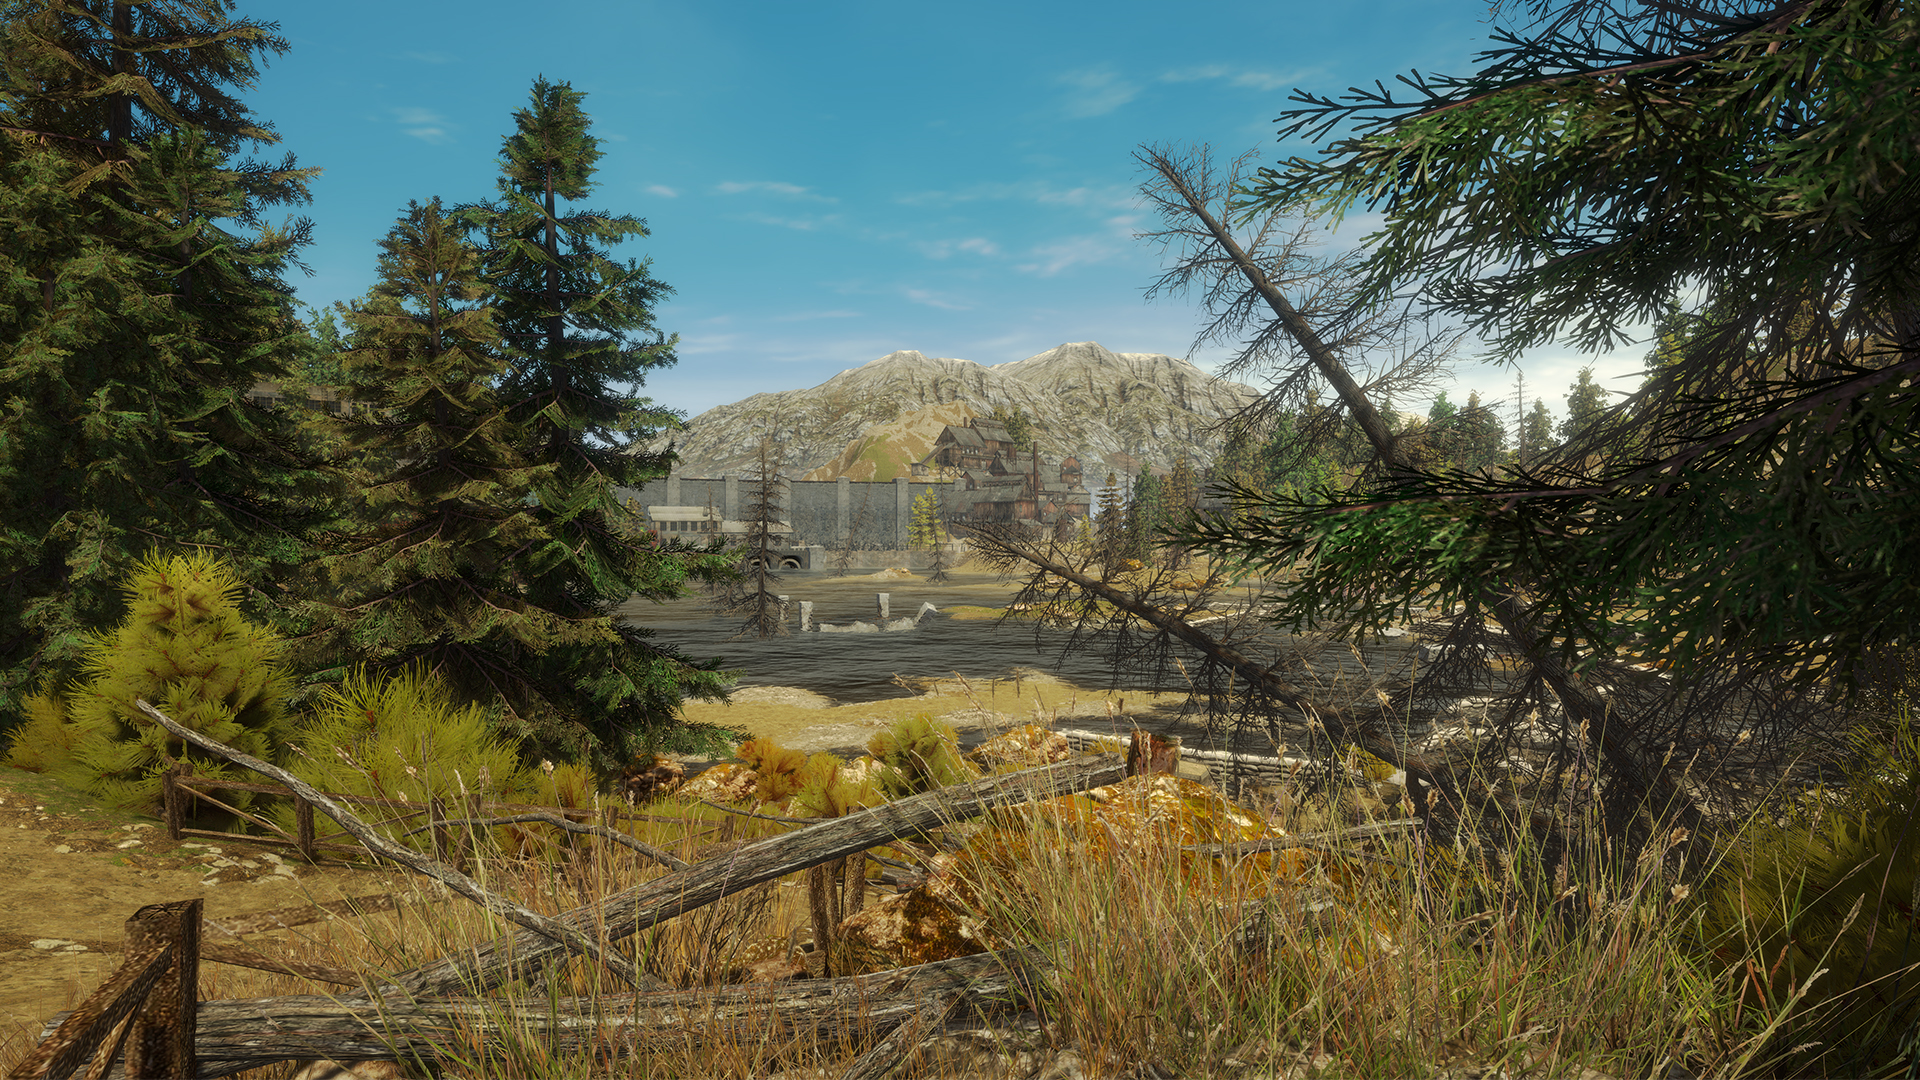 Gold Rush: The Game screenshot